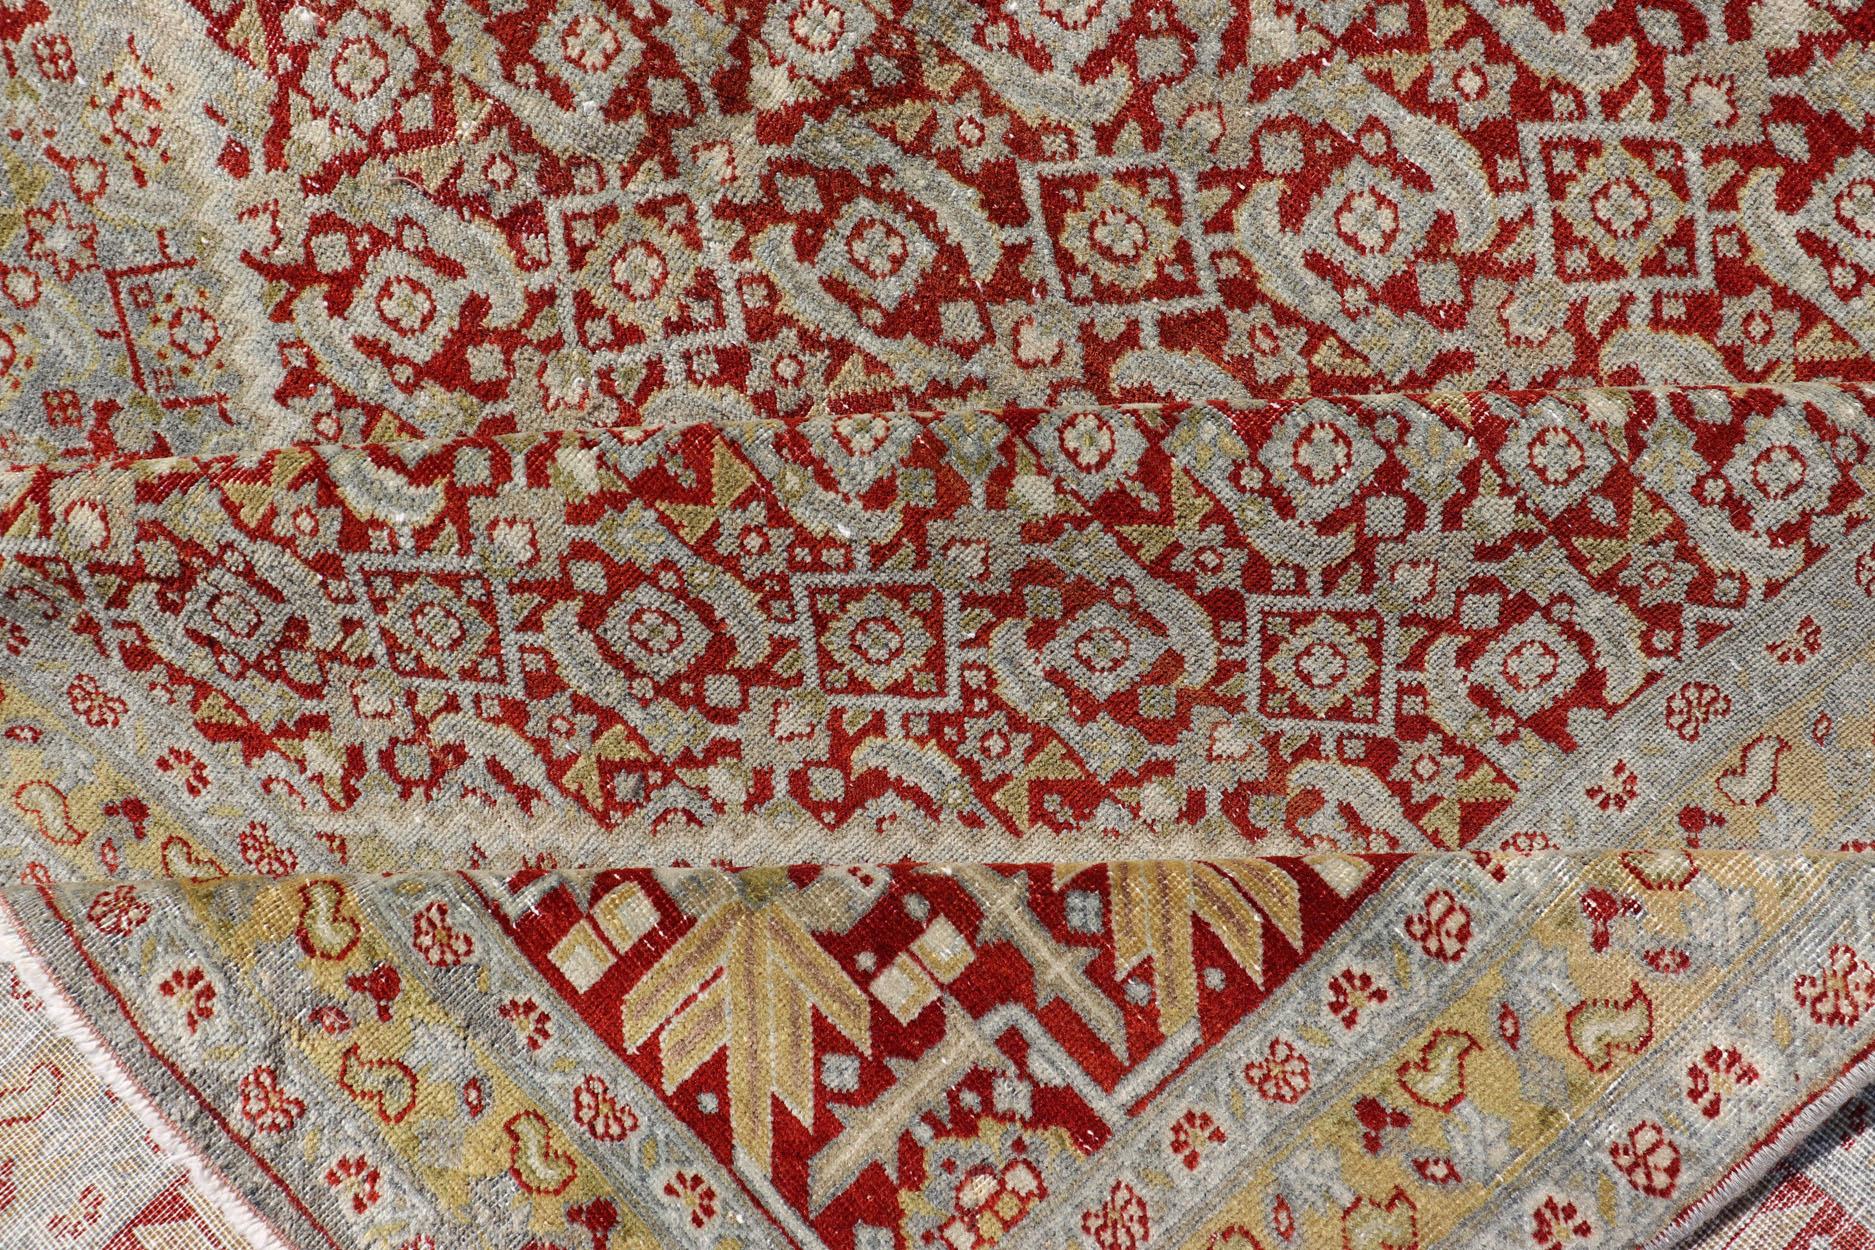 Antique Persian Tabriz Distressed Carpet with Geometric Diamond Design For Sale 4